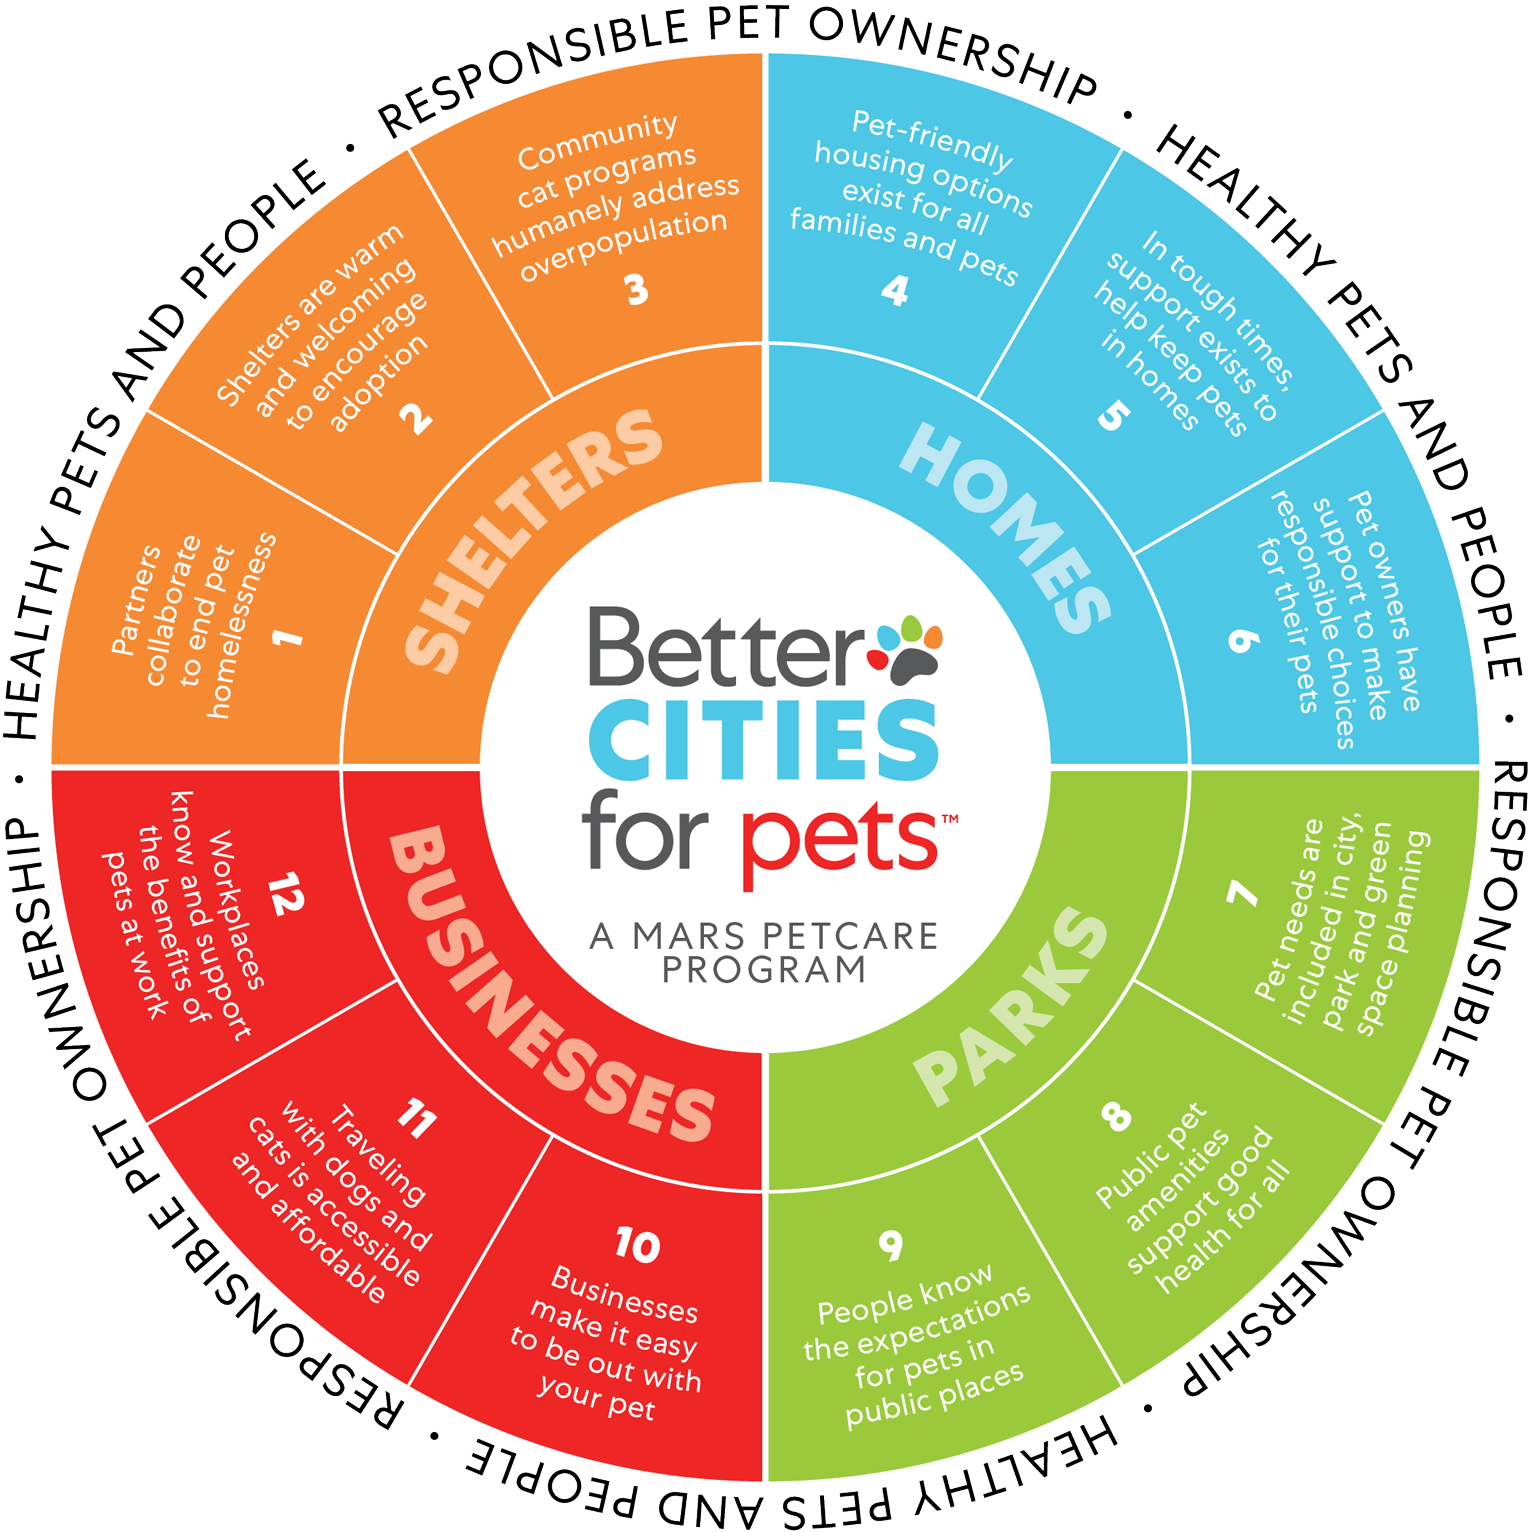 Better Cities for Pets Goals